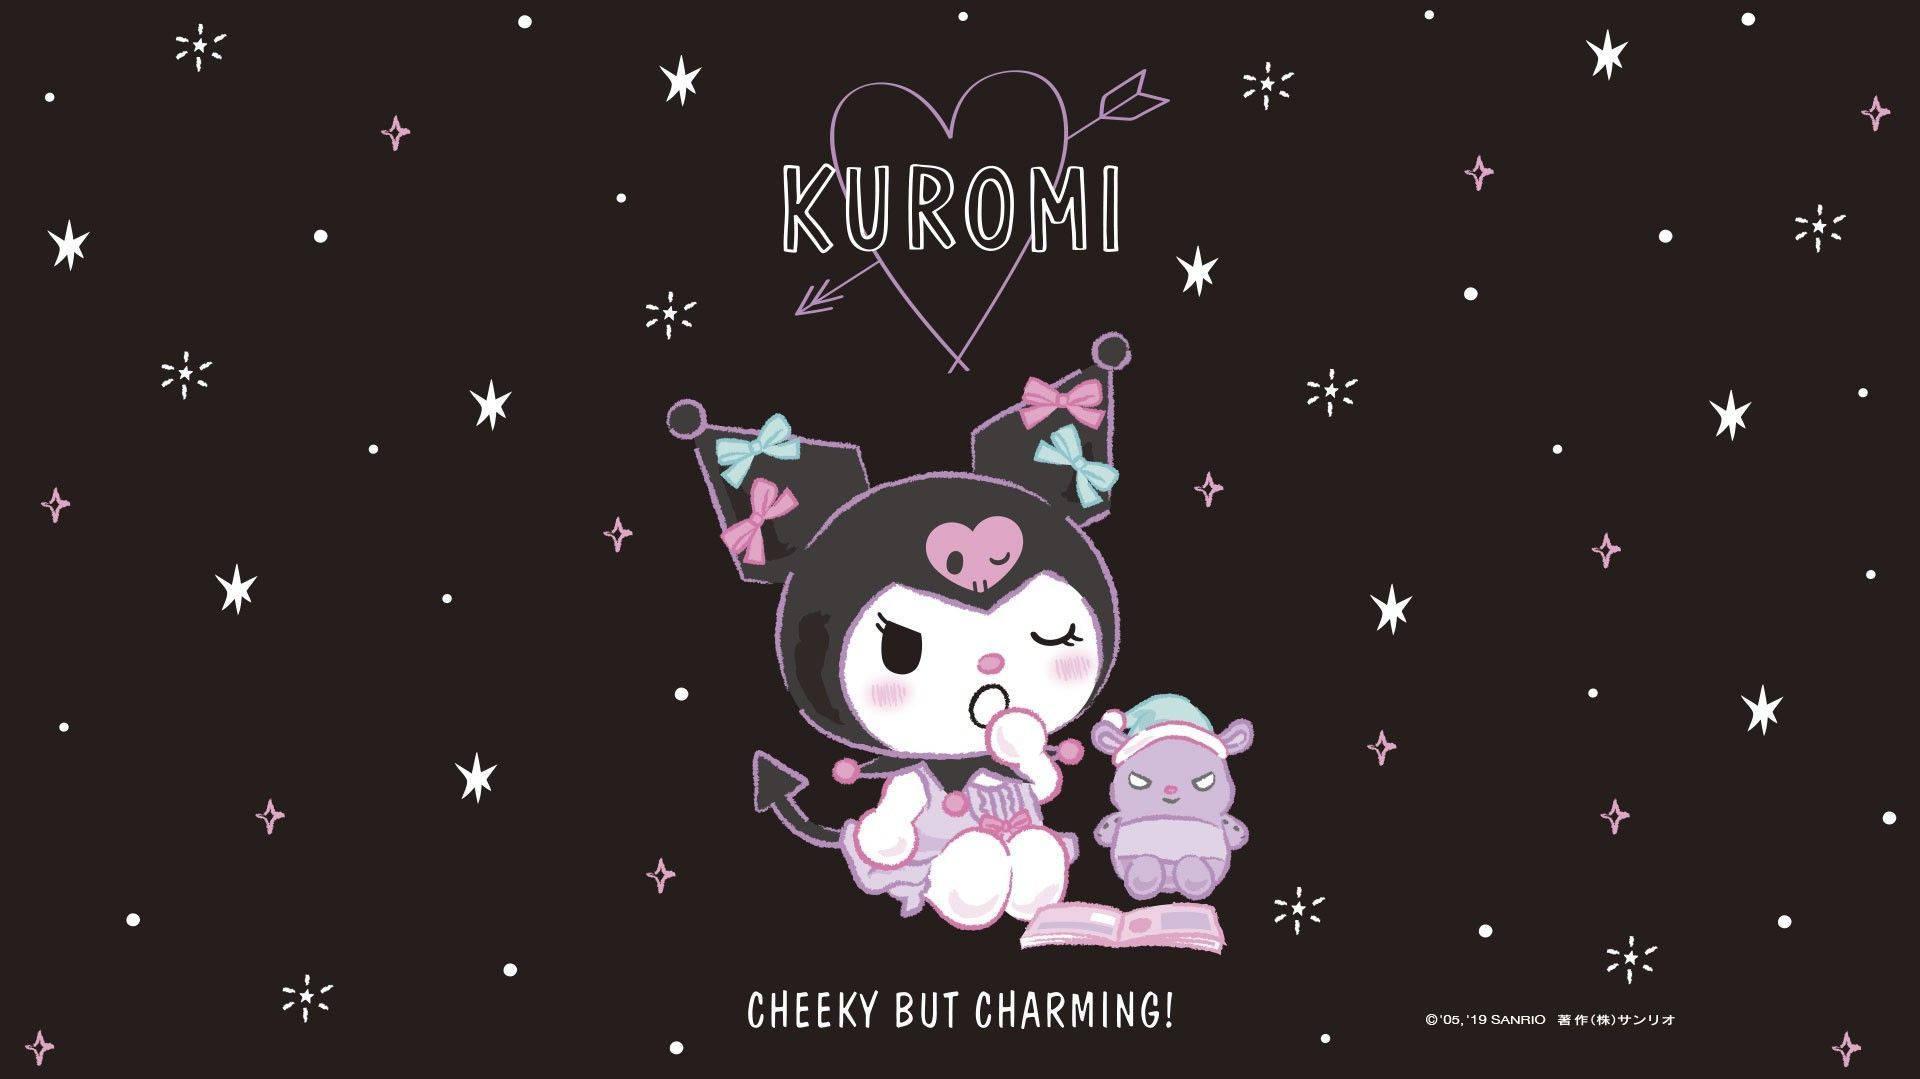 Free Kuromi Wallpaper Downloads [200] Kuromi Wallpapers for FREE